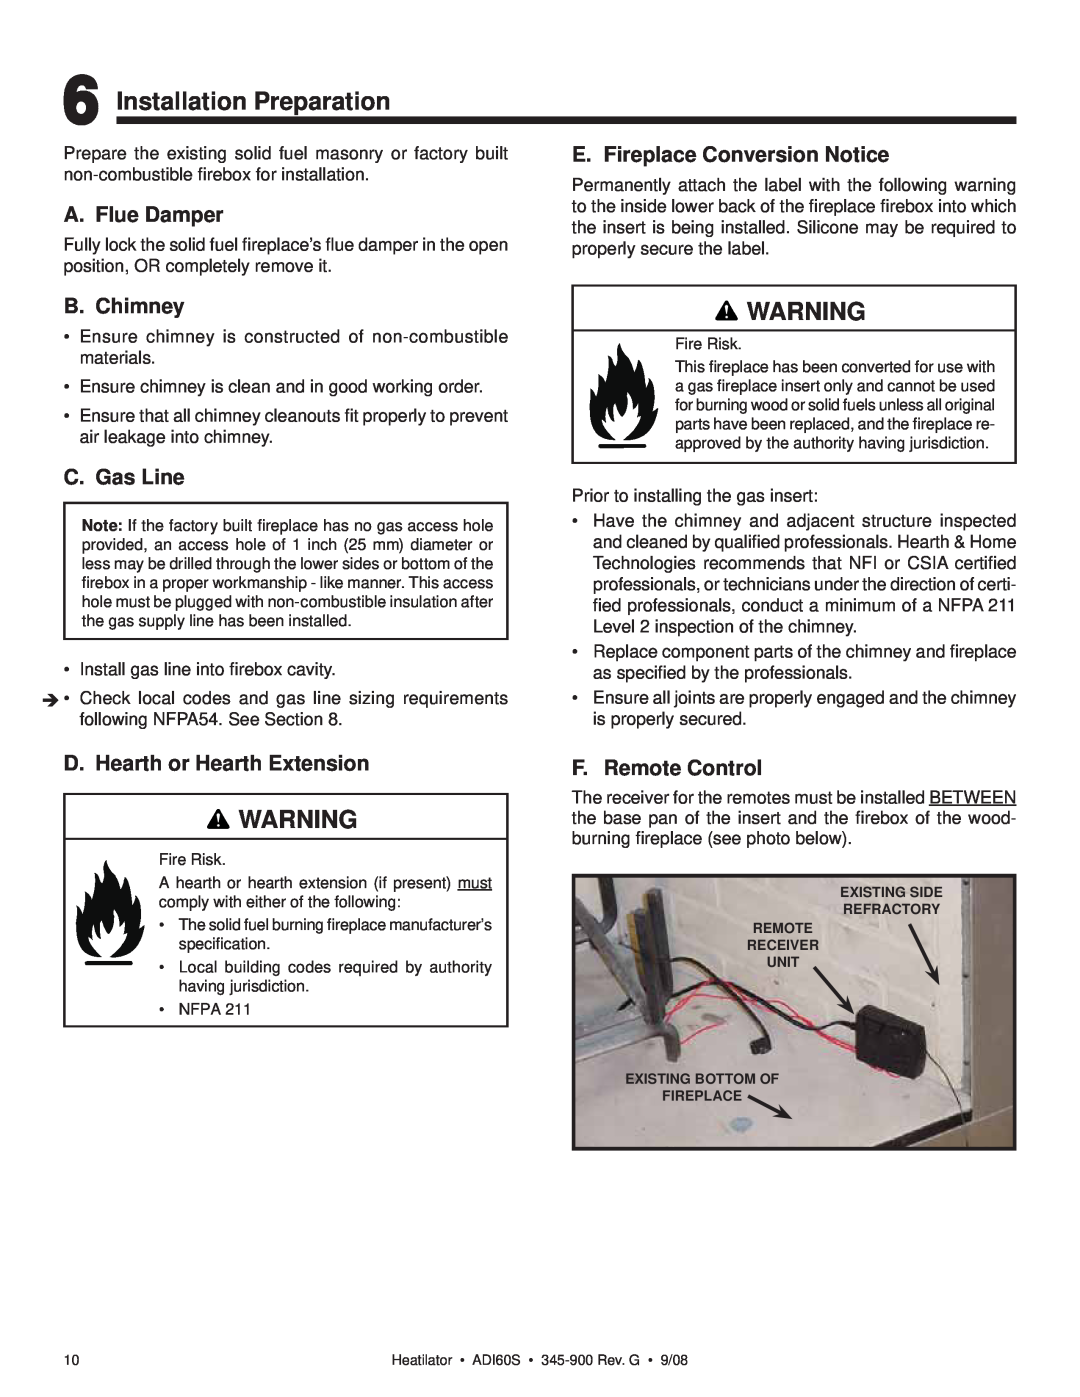 Heatiator ADI60S Installation Preparation, A. Flue Damper, E. Fireplace Conversion Notice, B. Chimney, C. Gas Line 